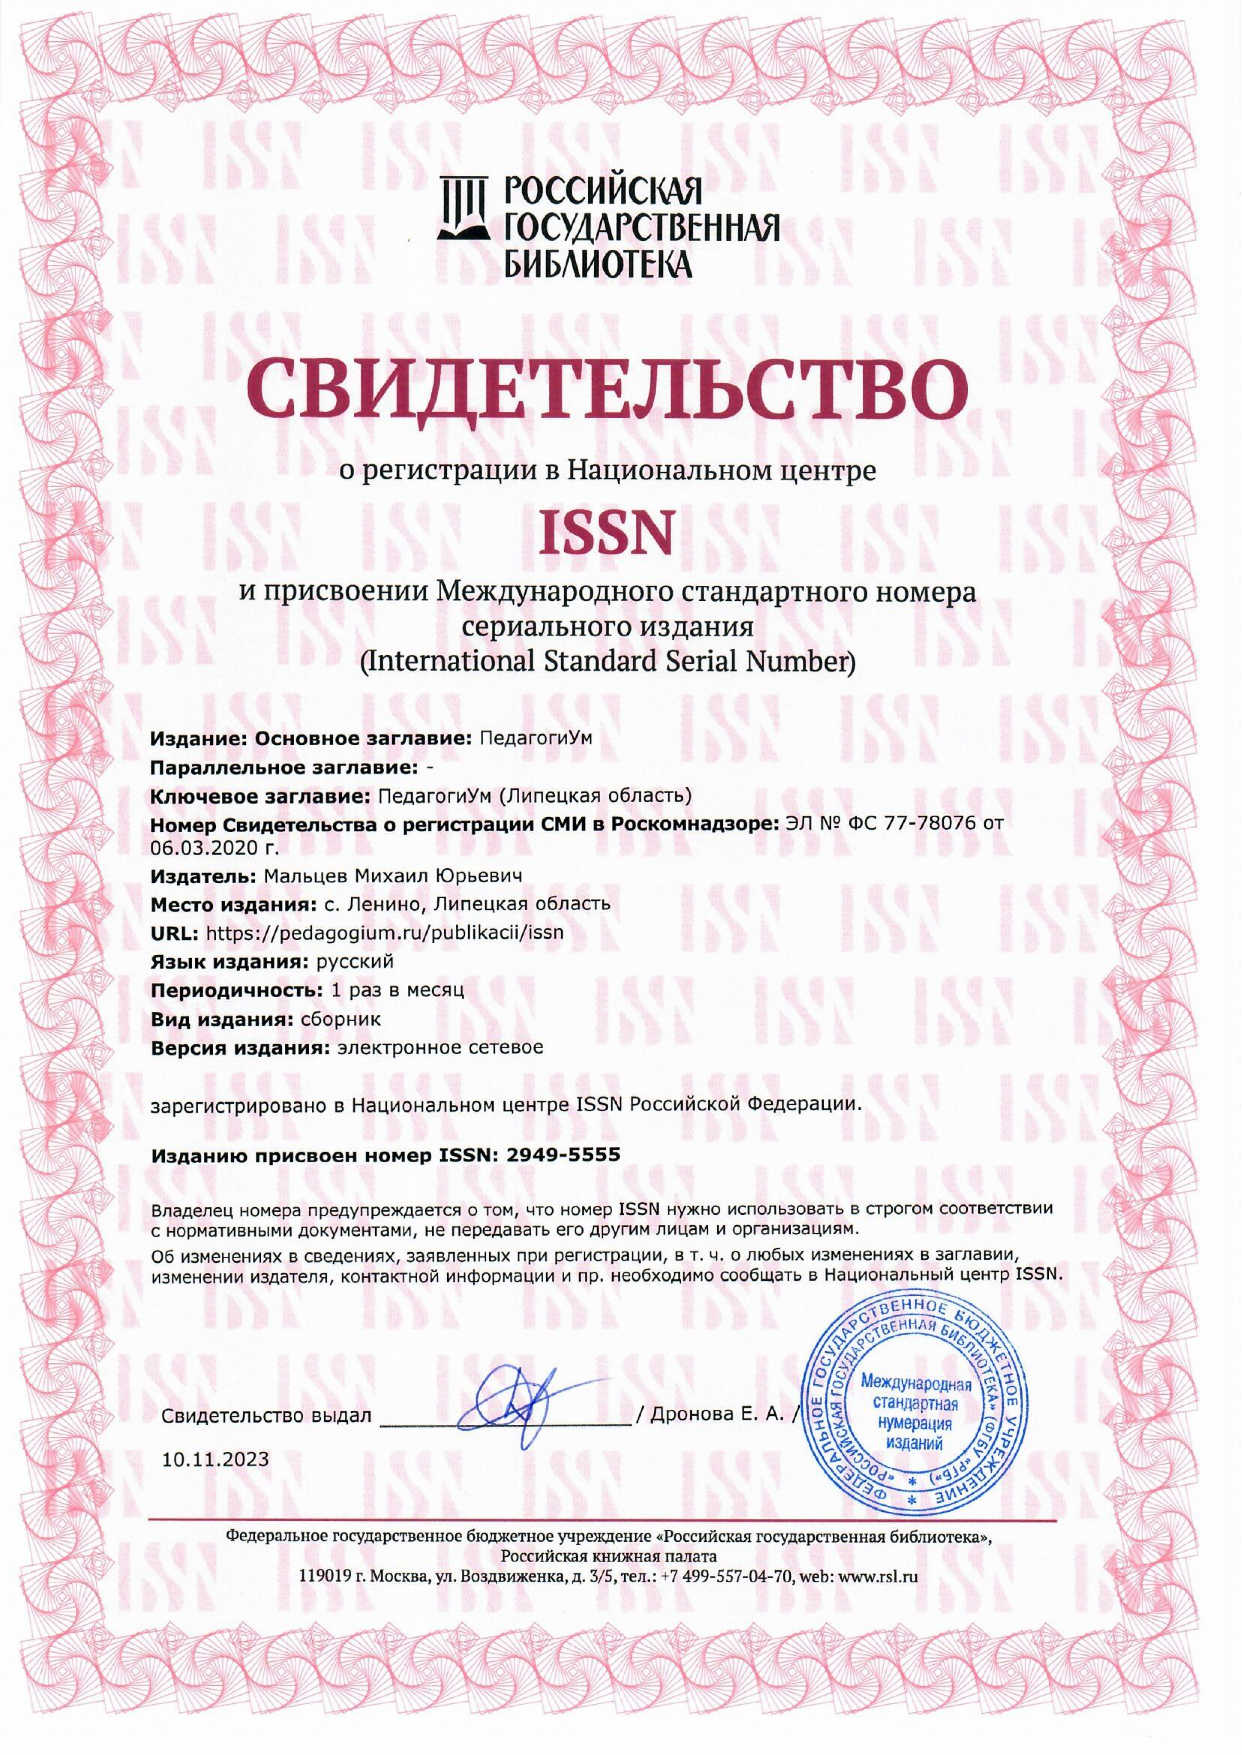 ISSN сборника педагогических публикаций ПедагогиУм.